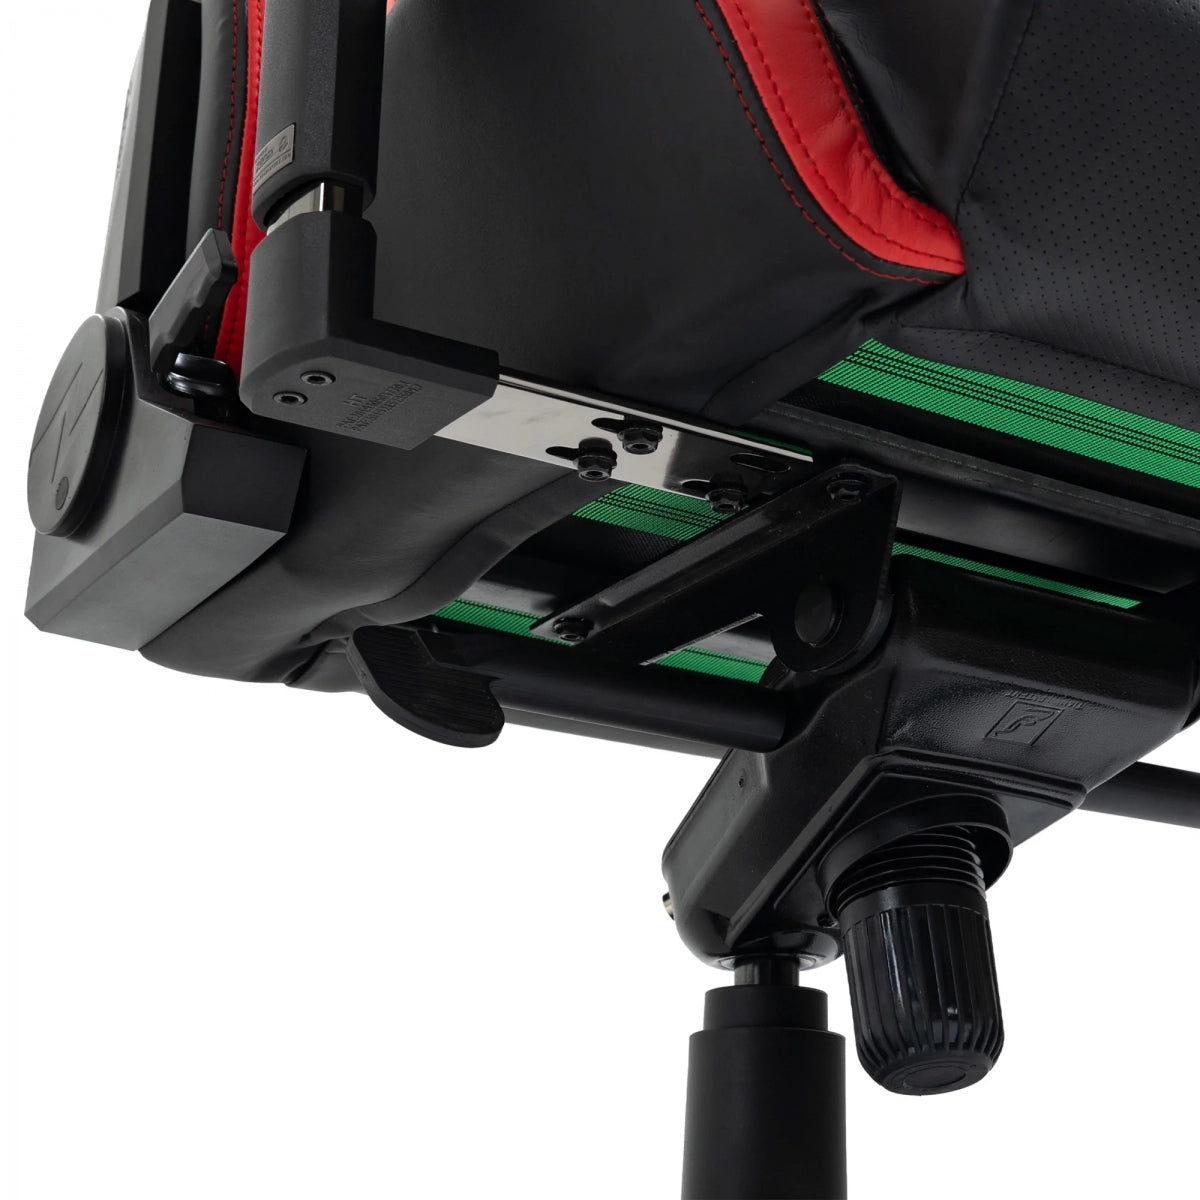 Zenox Jupiter-MK2 Gaming Chair (Leather/Red)